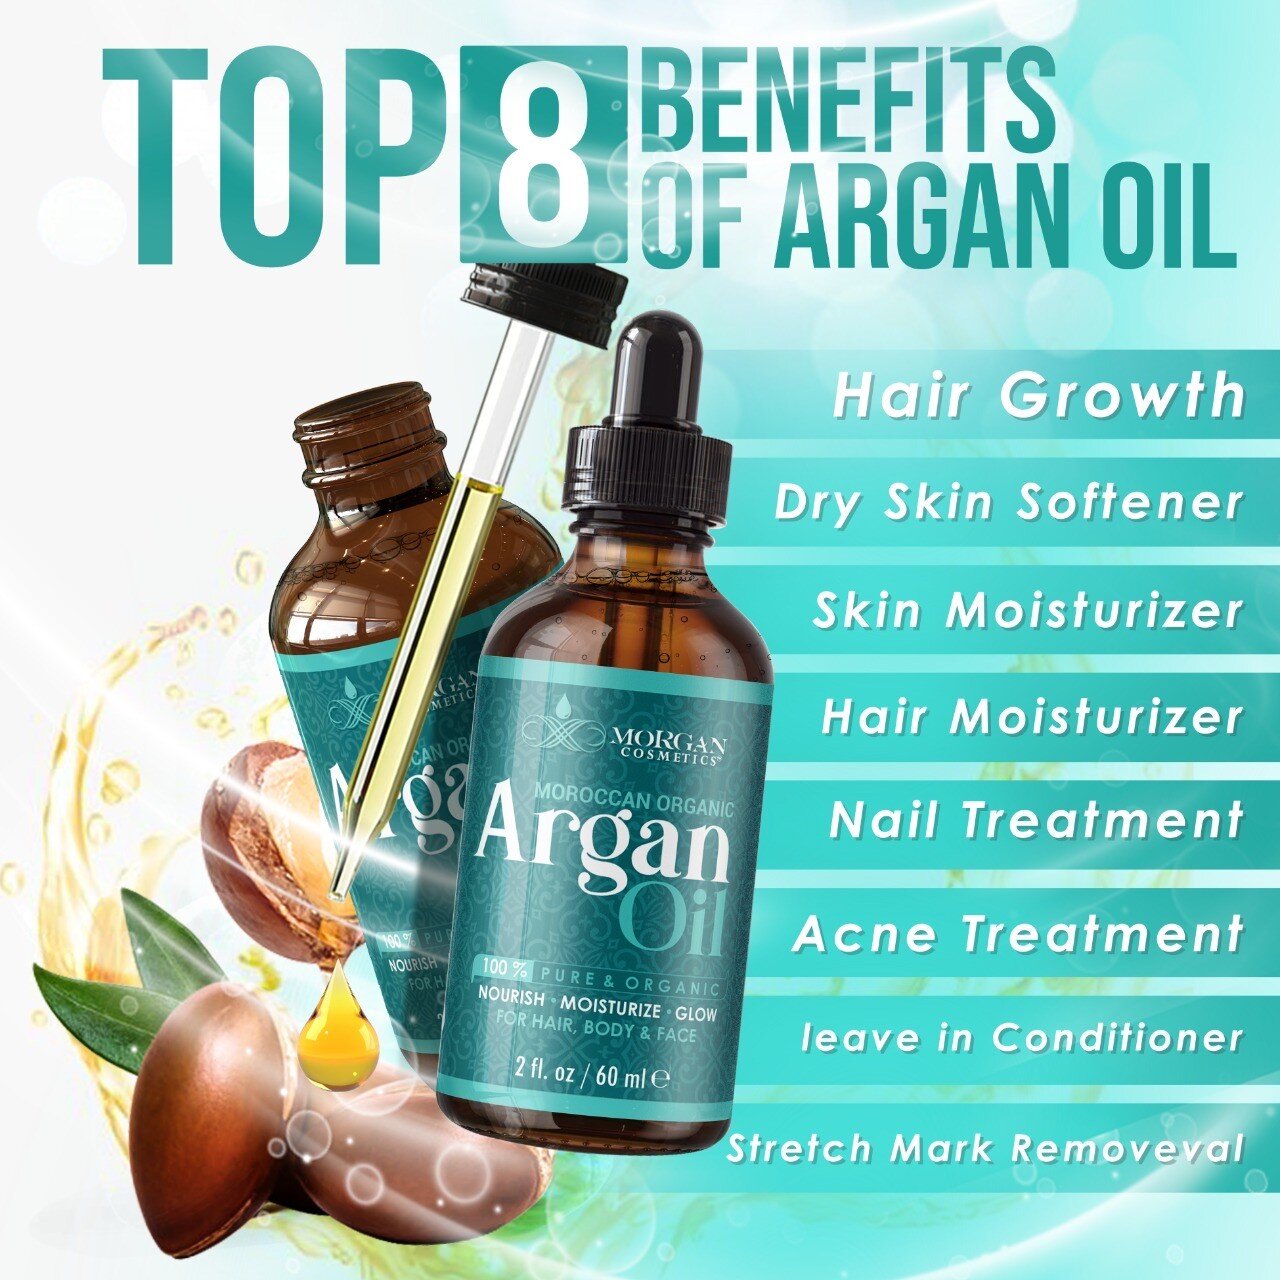 100% Pure Argan Oil freeshipping - morgancosmeticsofficial